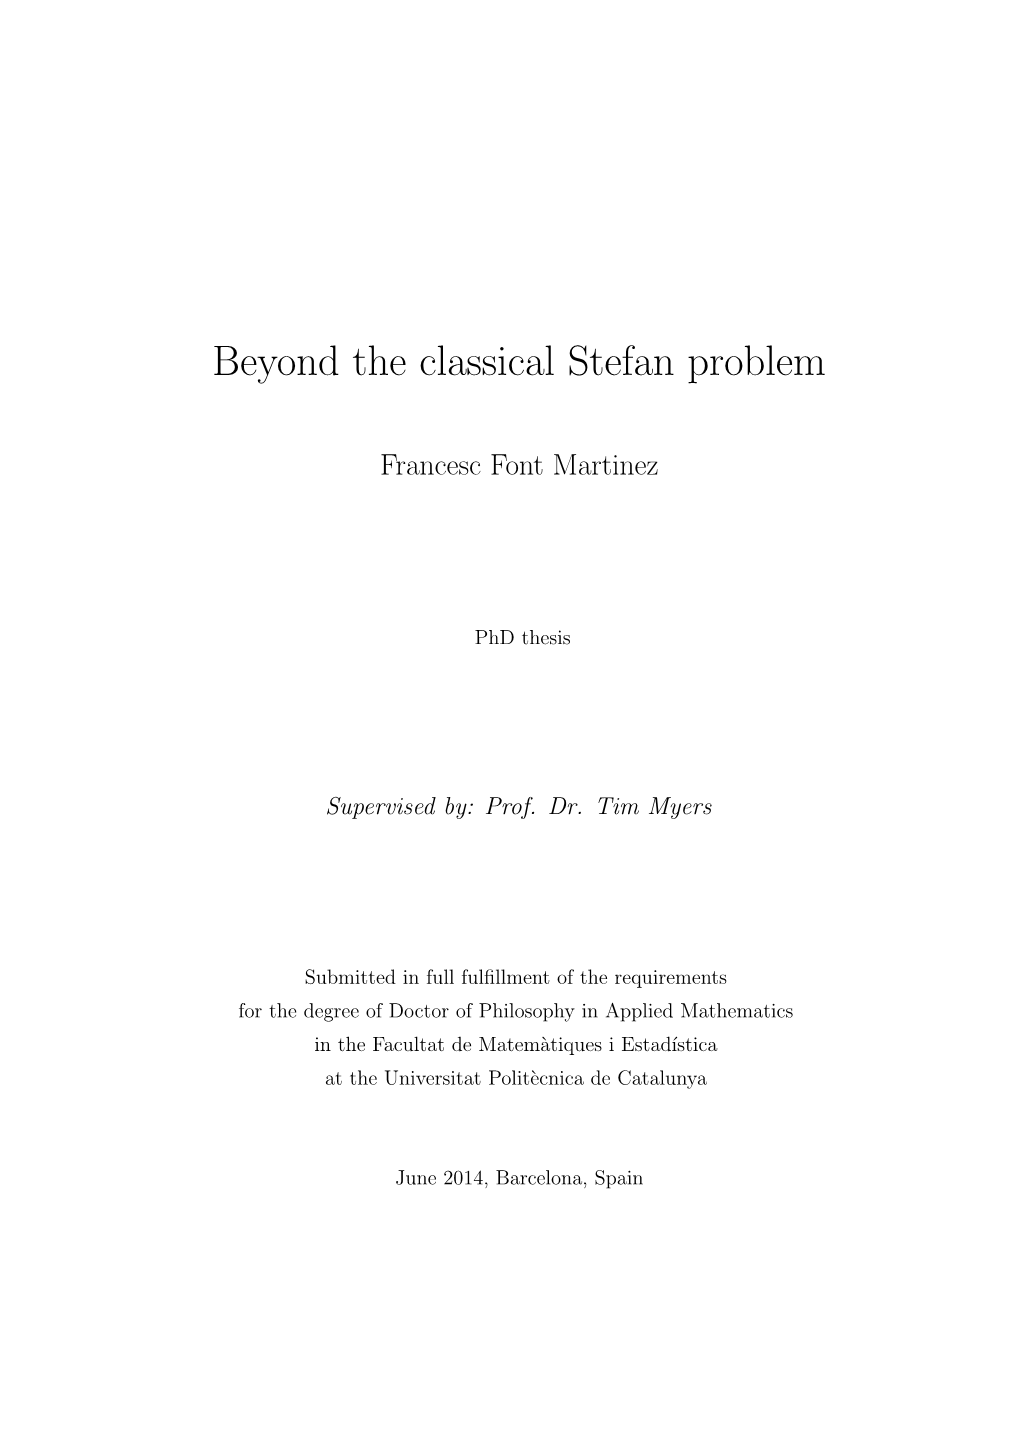 Beyond the Classical Stefan Problem